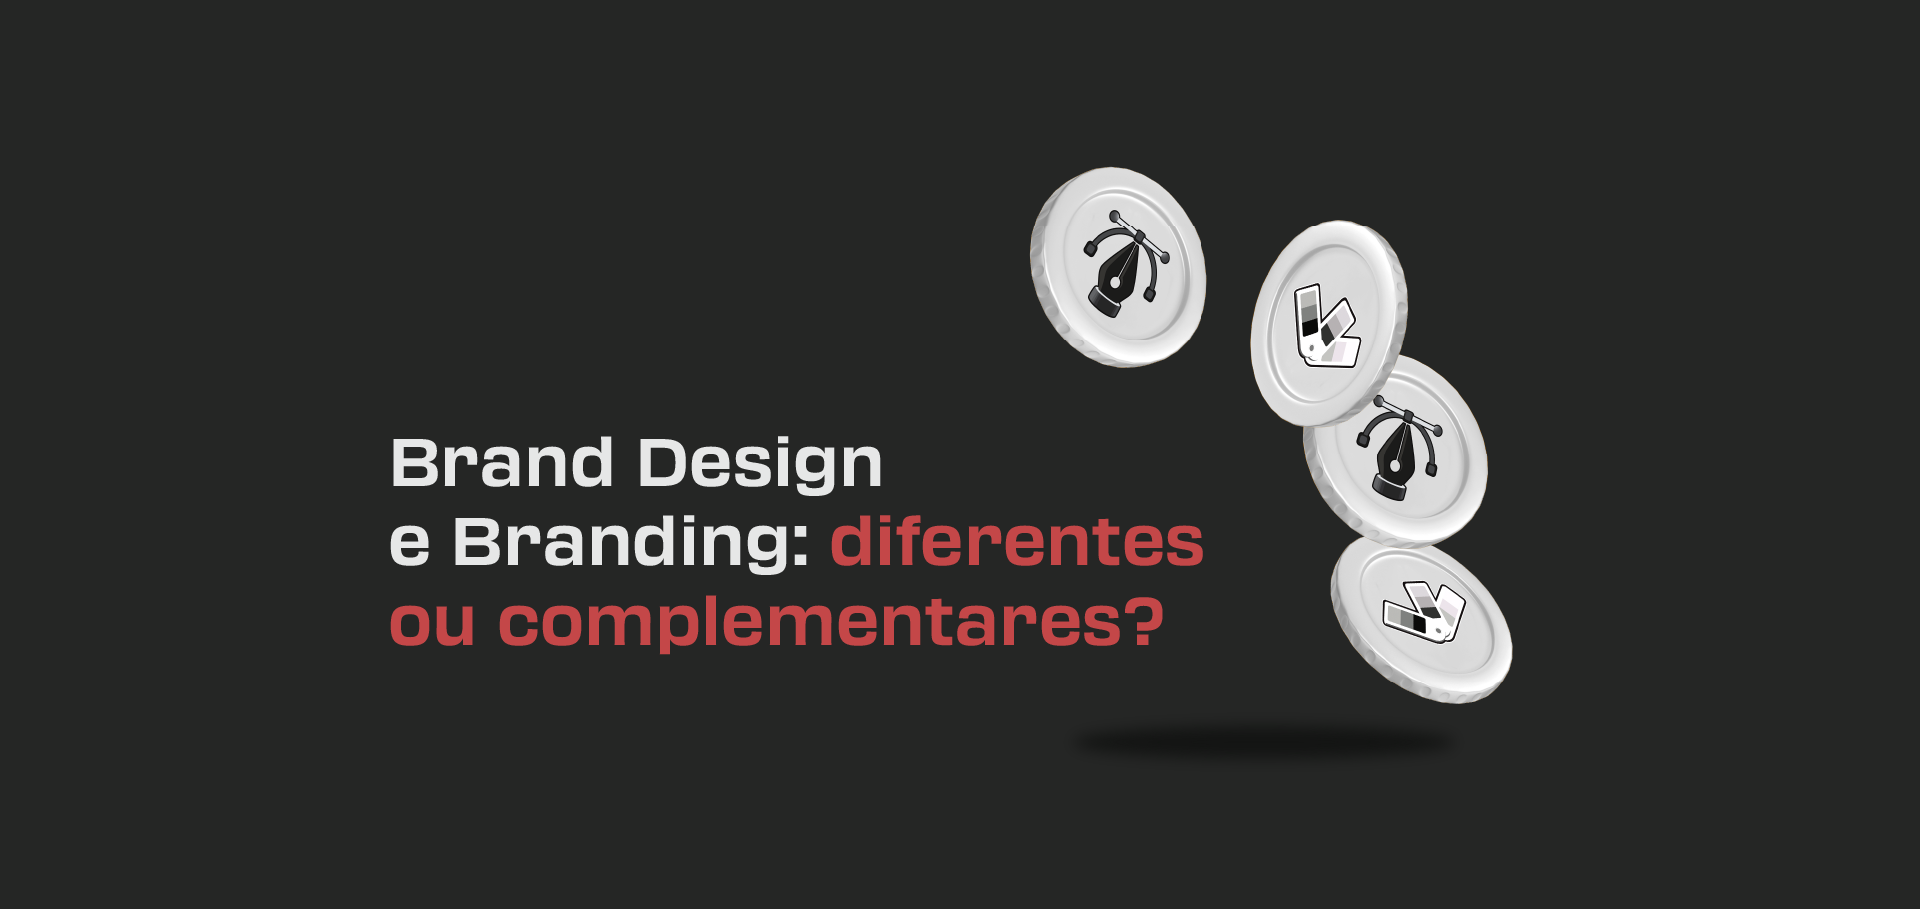 Brand Design e Branding: diferentes ou complementares? 